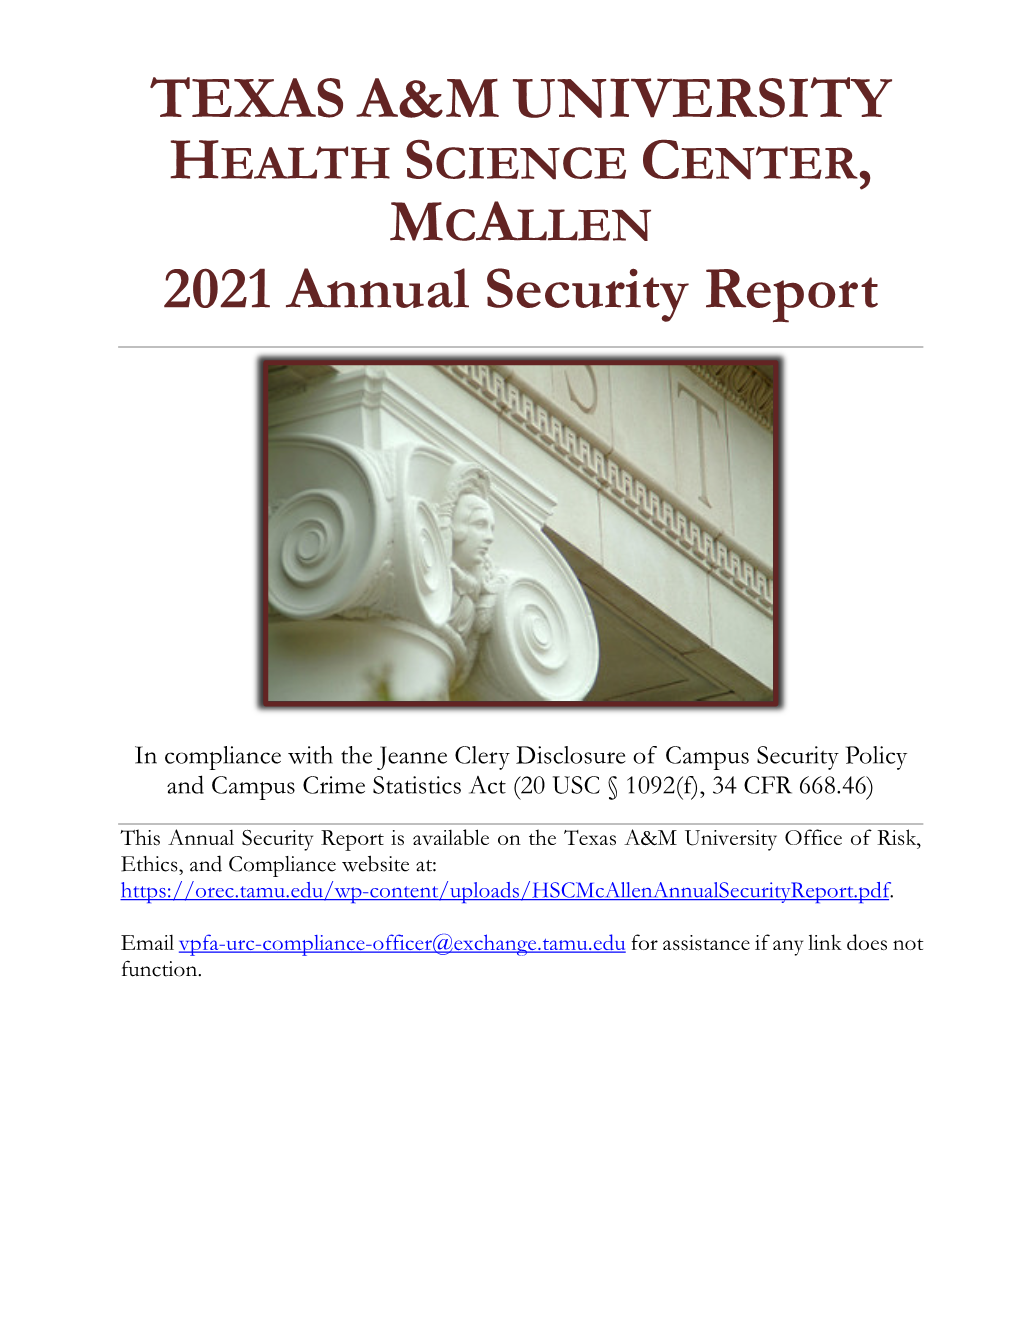 Texas A&M University Health Science Center, Mcallen Annual Security